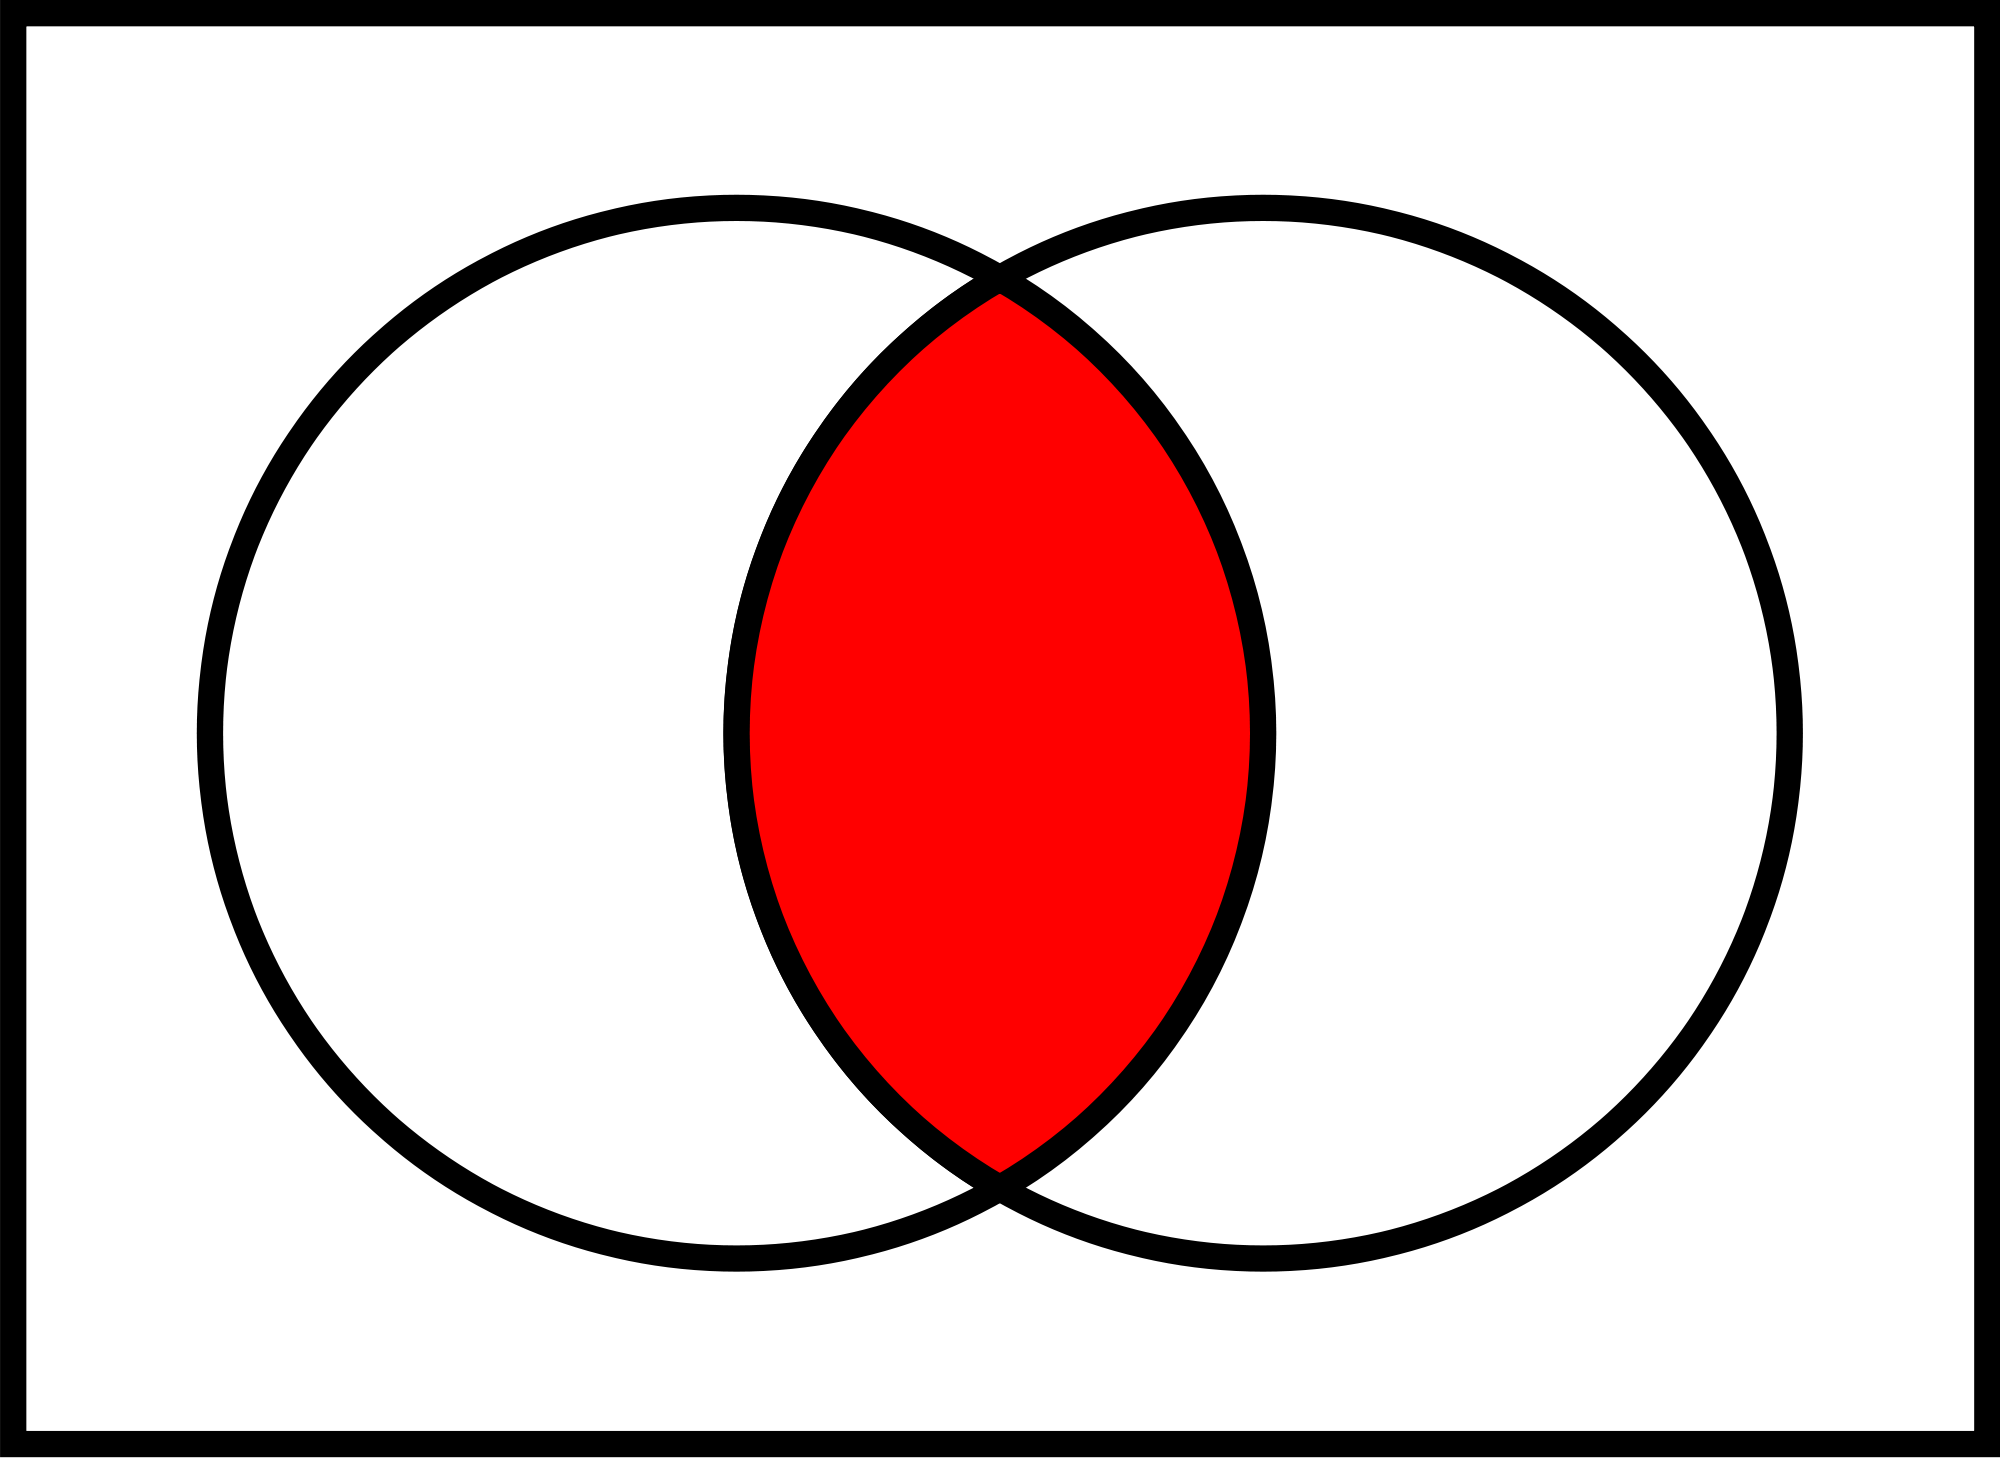 Blank Venn Diagram With 2 Circles